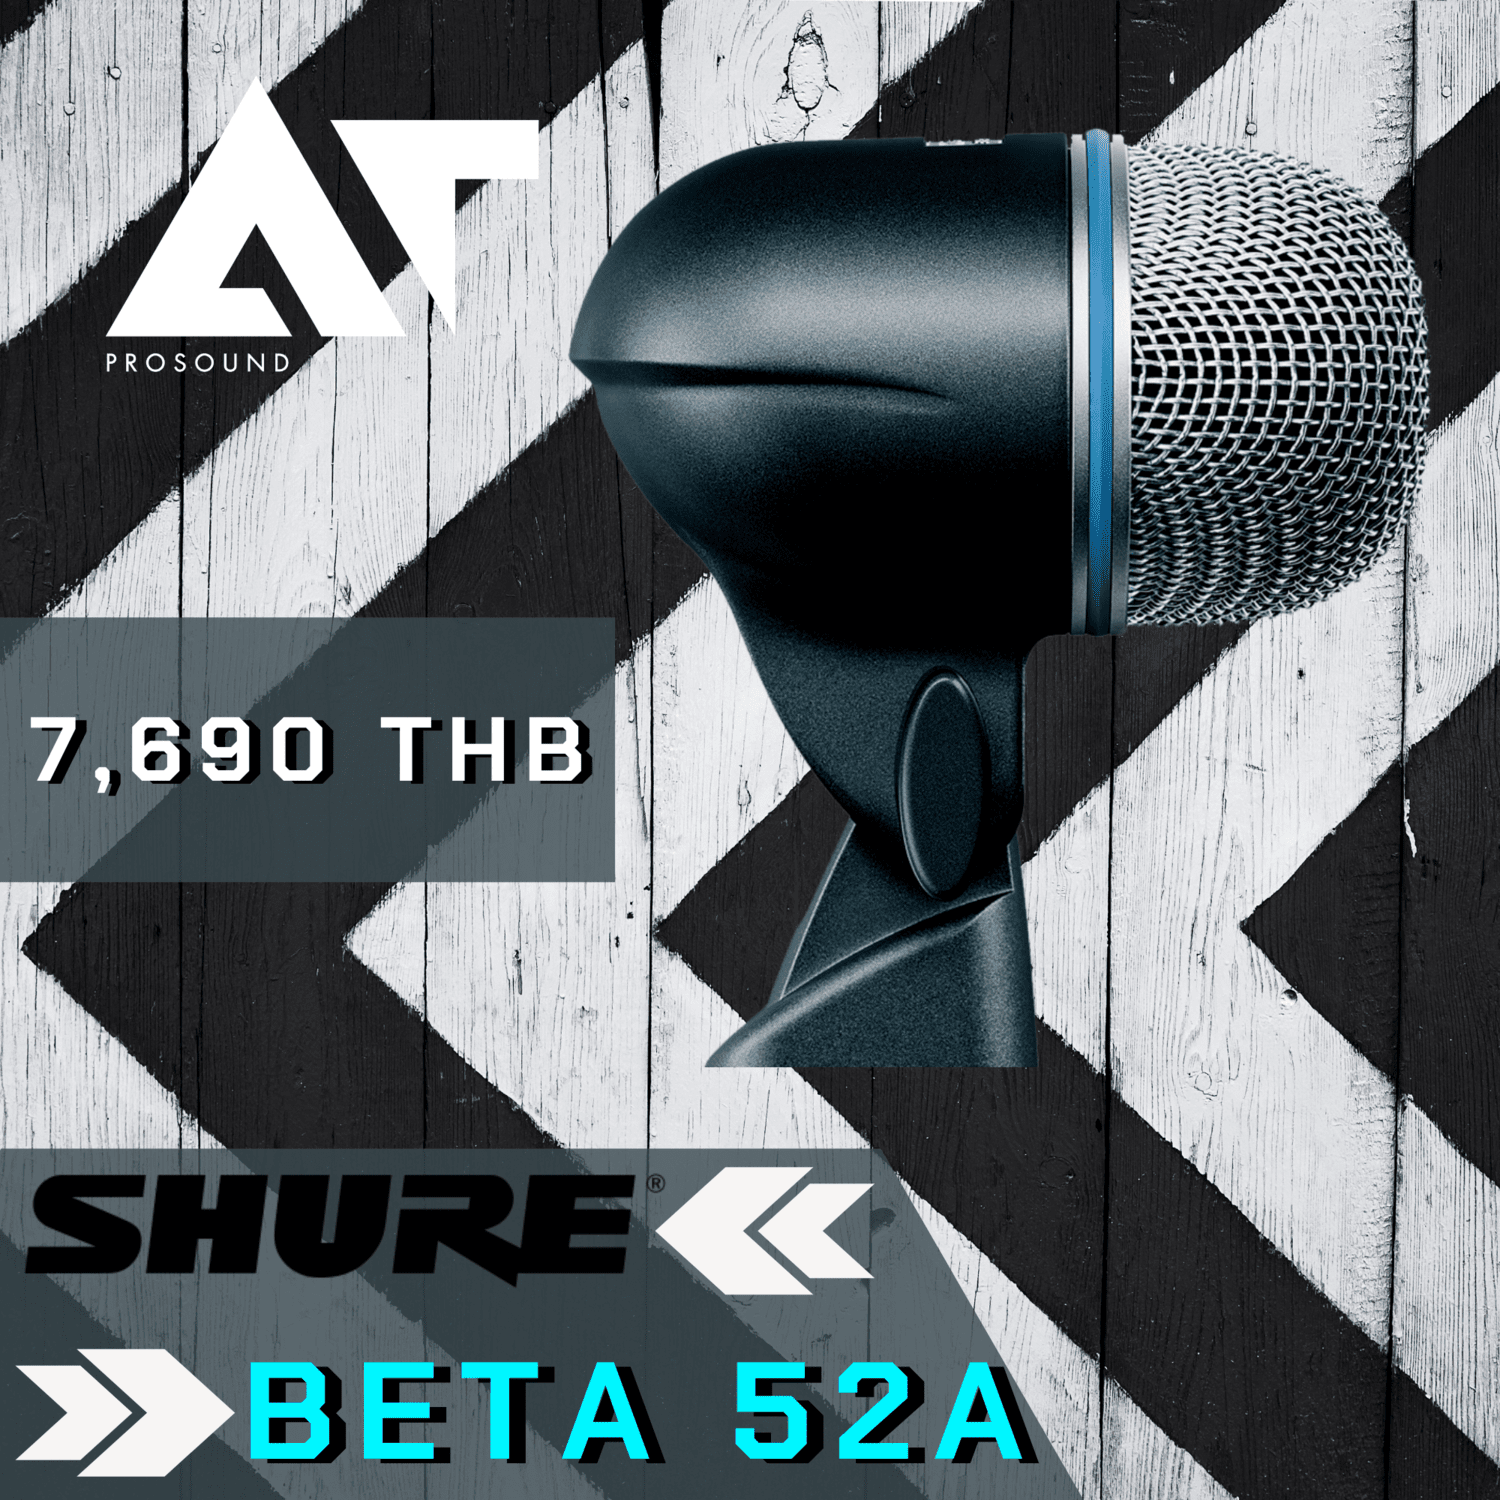 Shure beta 52a